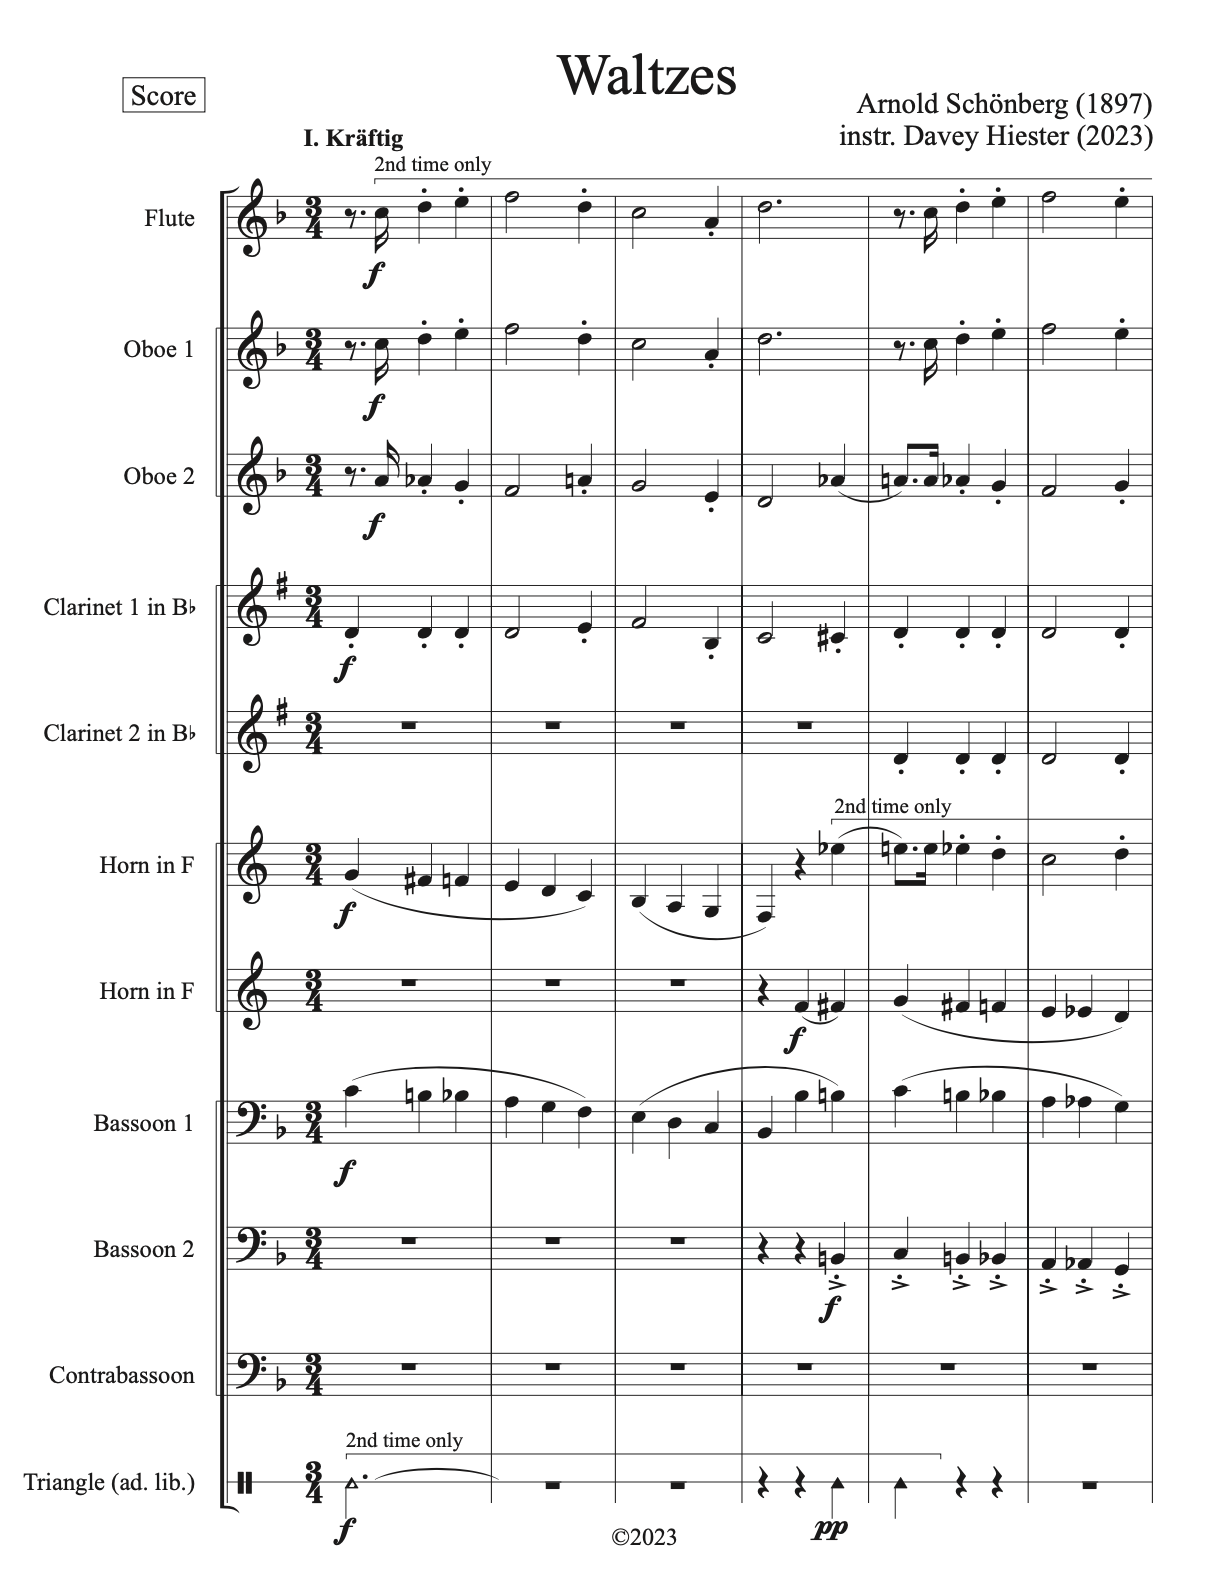 Arnold Schönberg; originally for String Orchestra